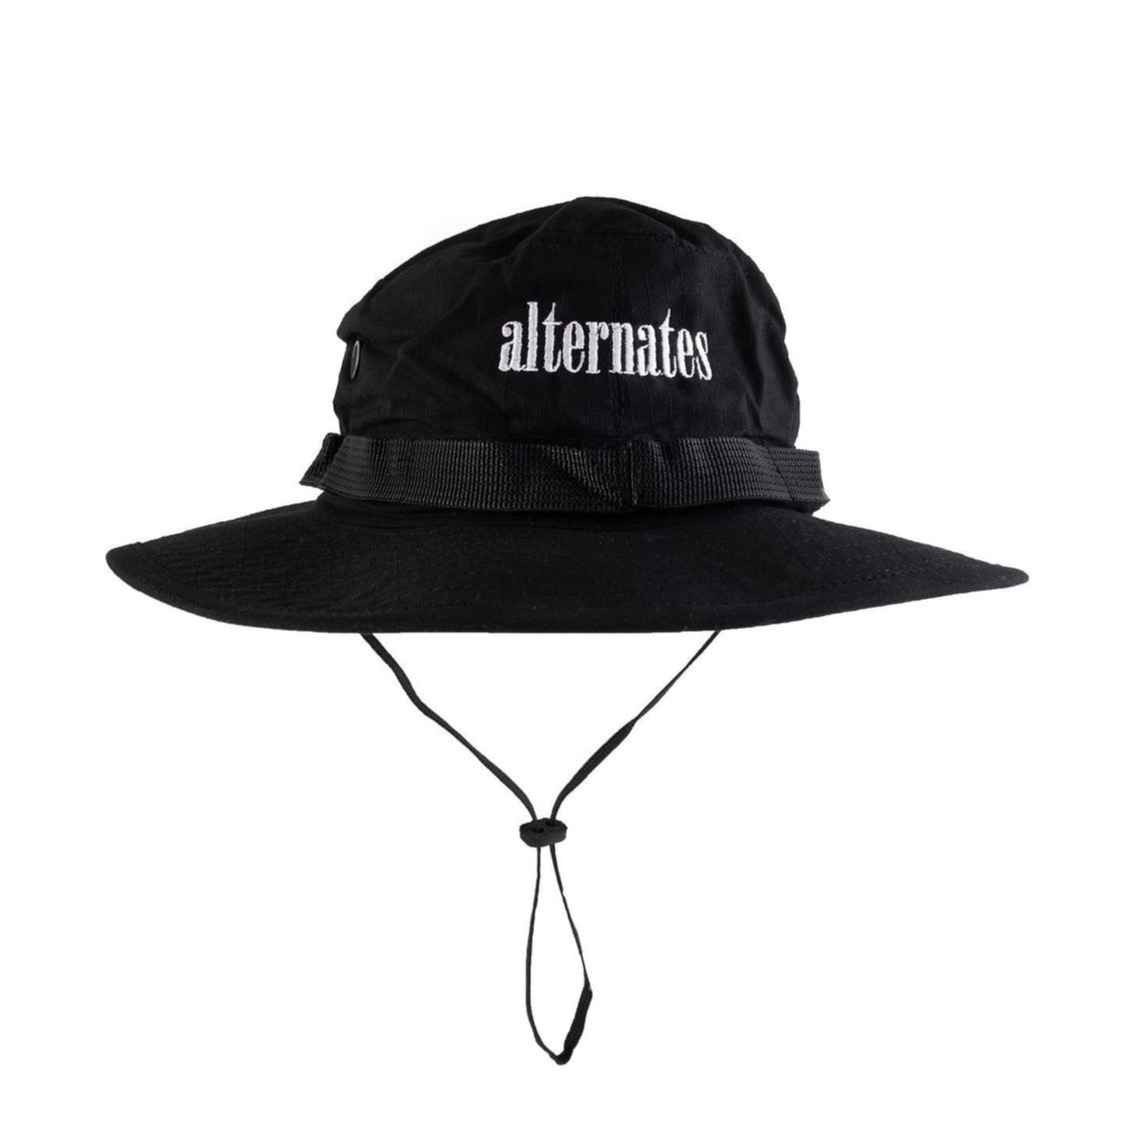 Alternates Camping Hat